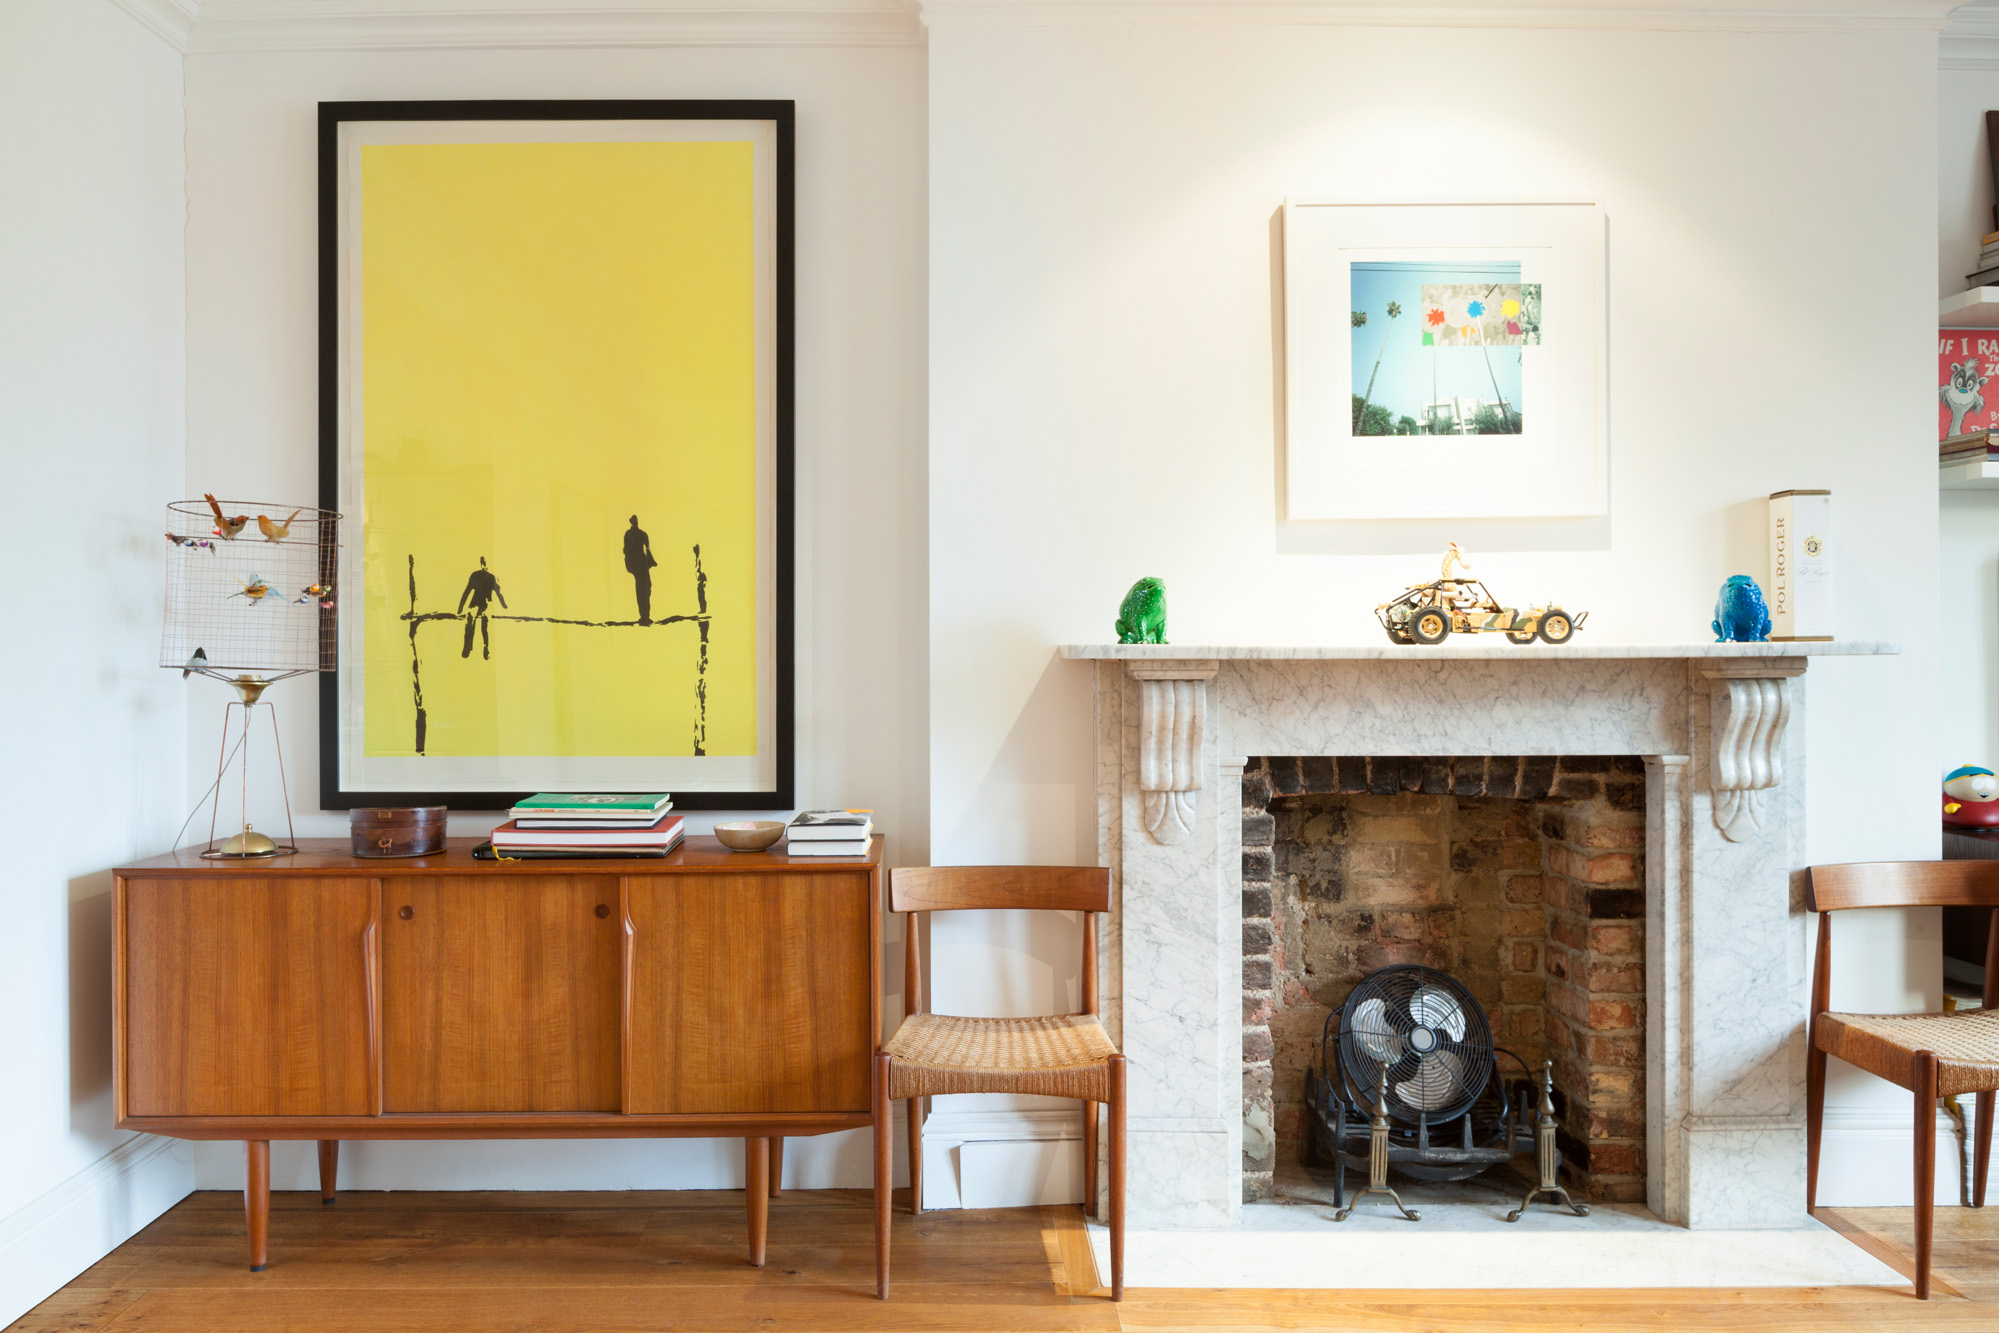 For Sale: Bassett Road North Kensington W10 contemporary living room